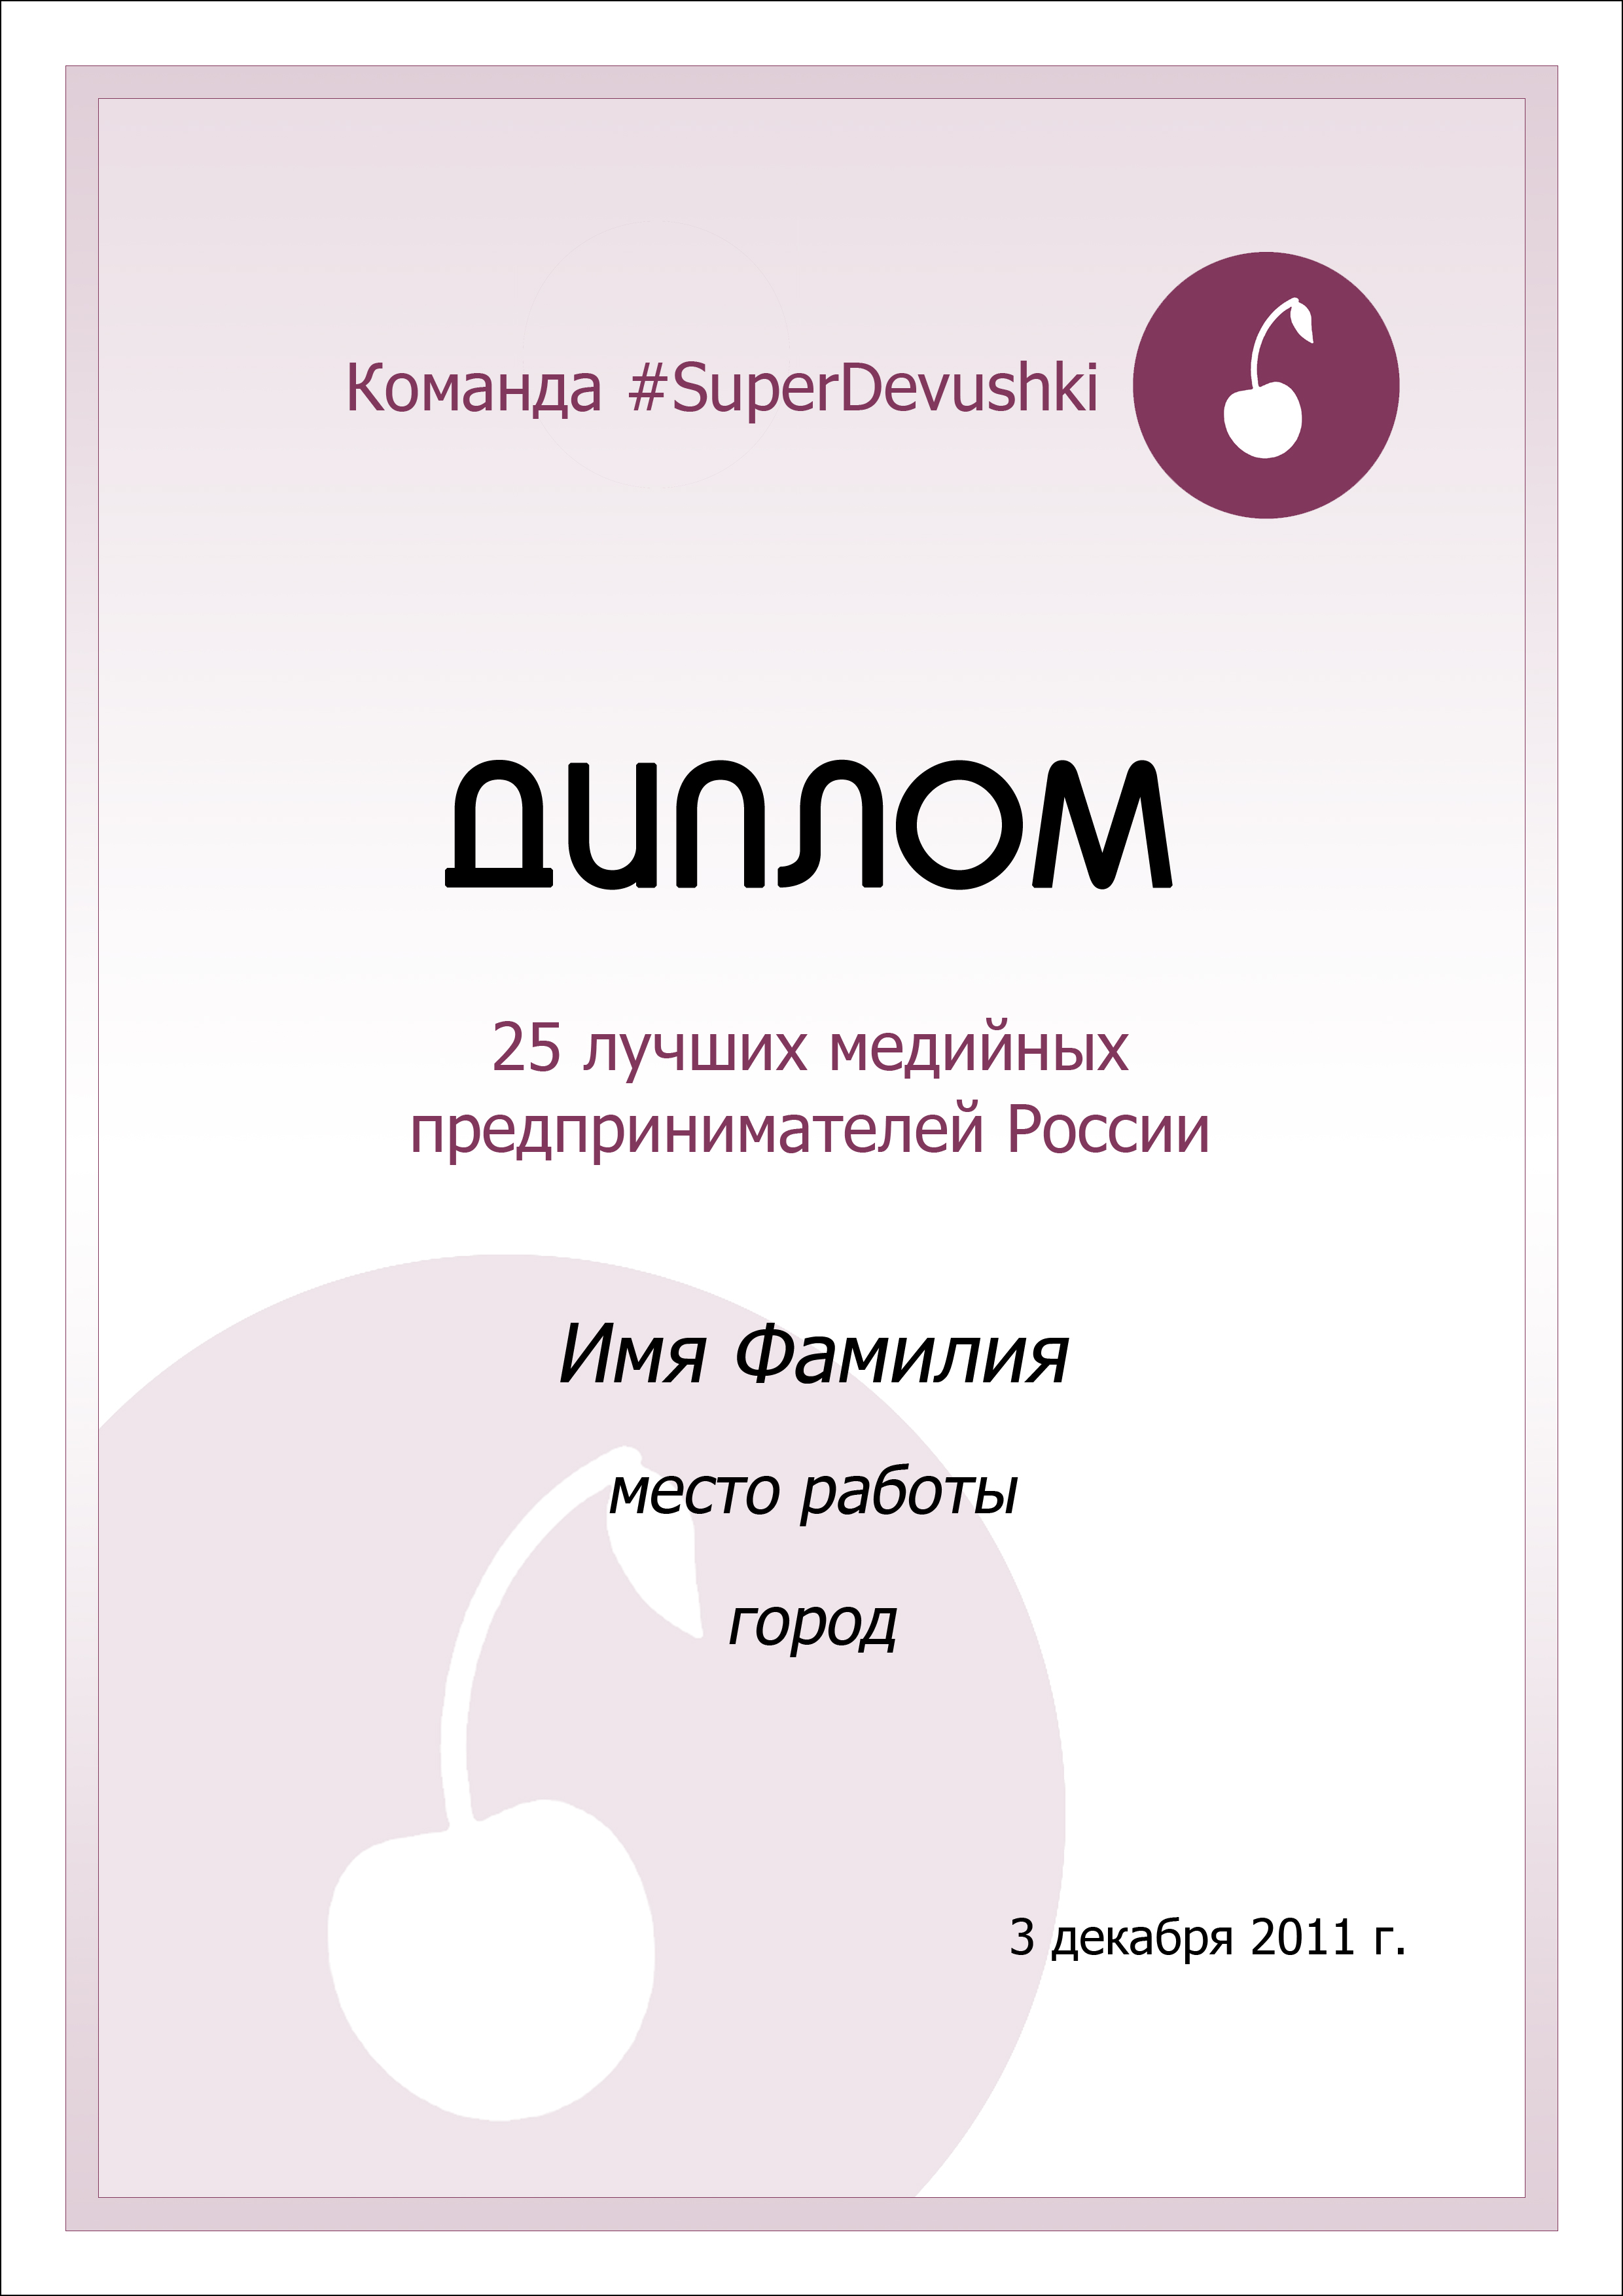 Команда #SuperDevushki